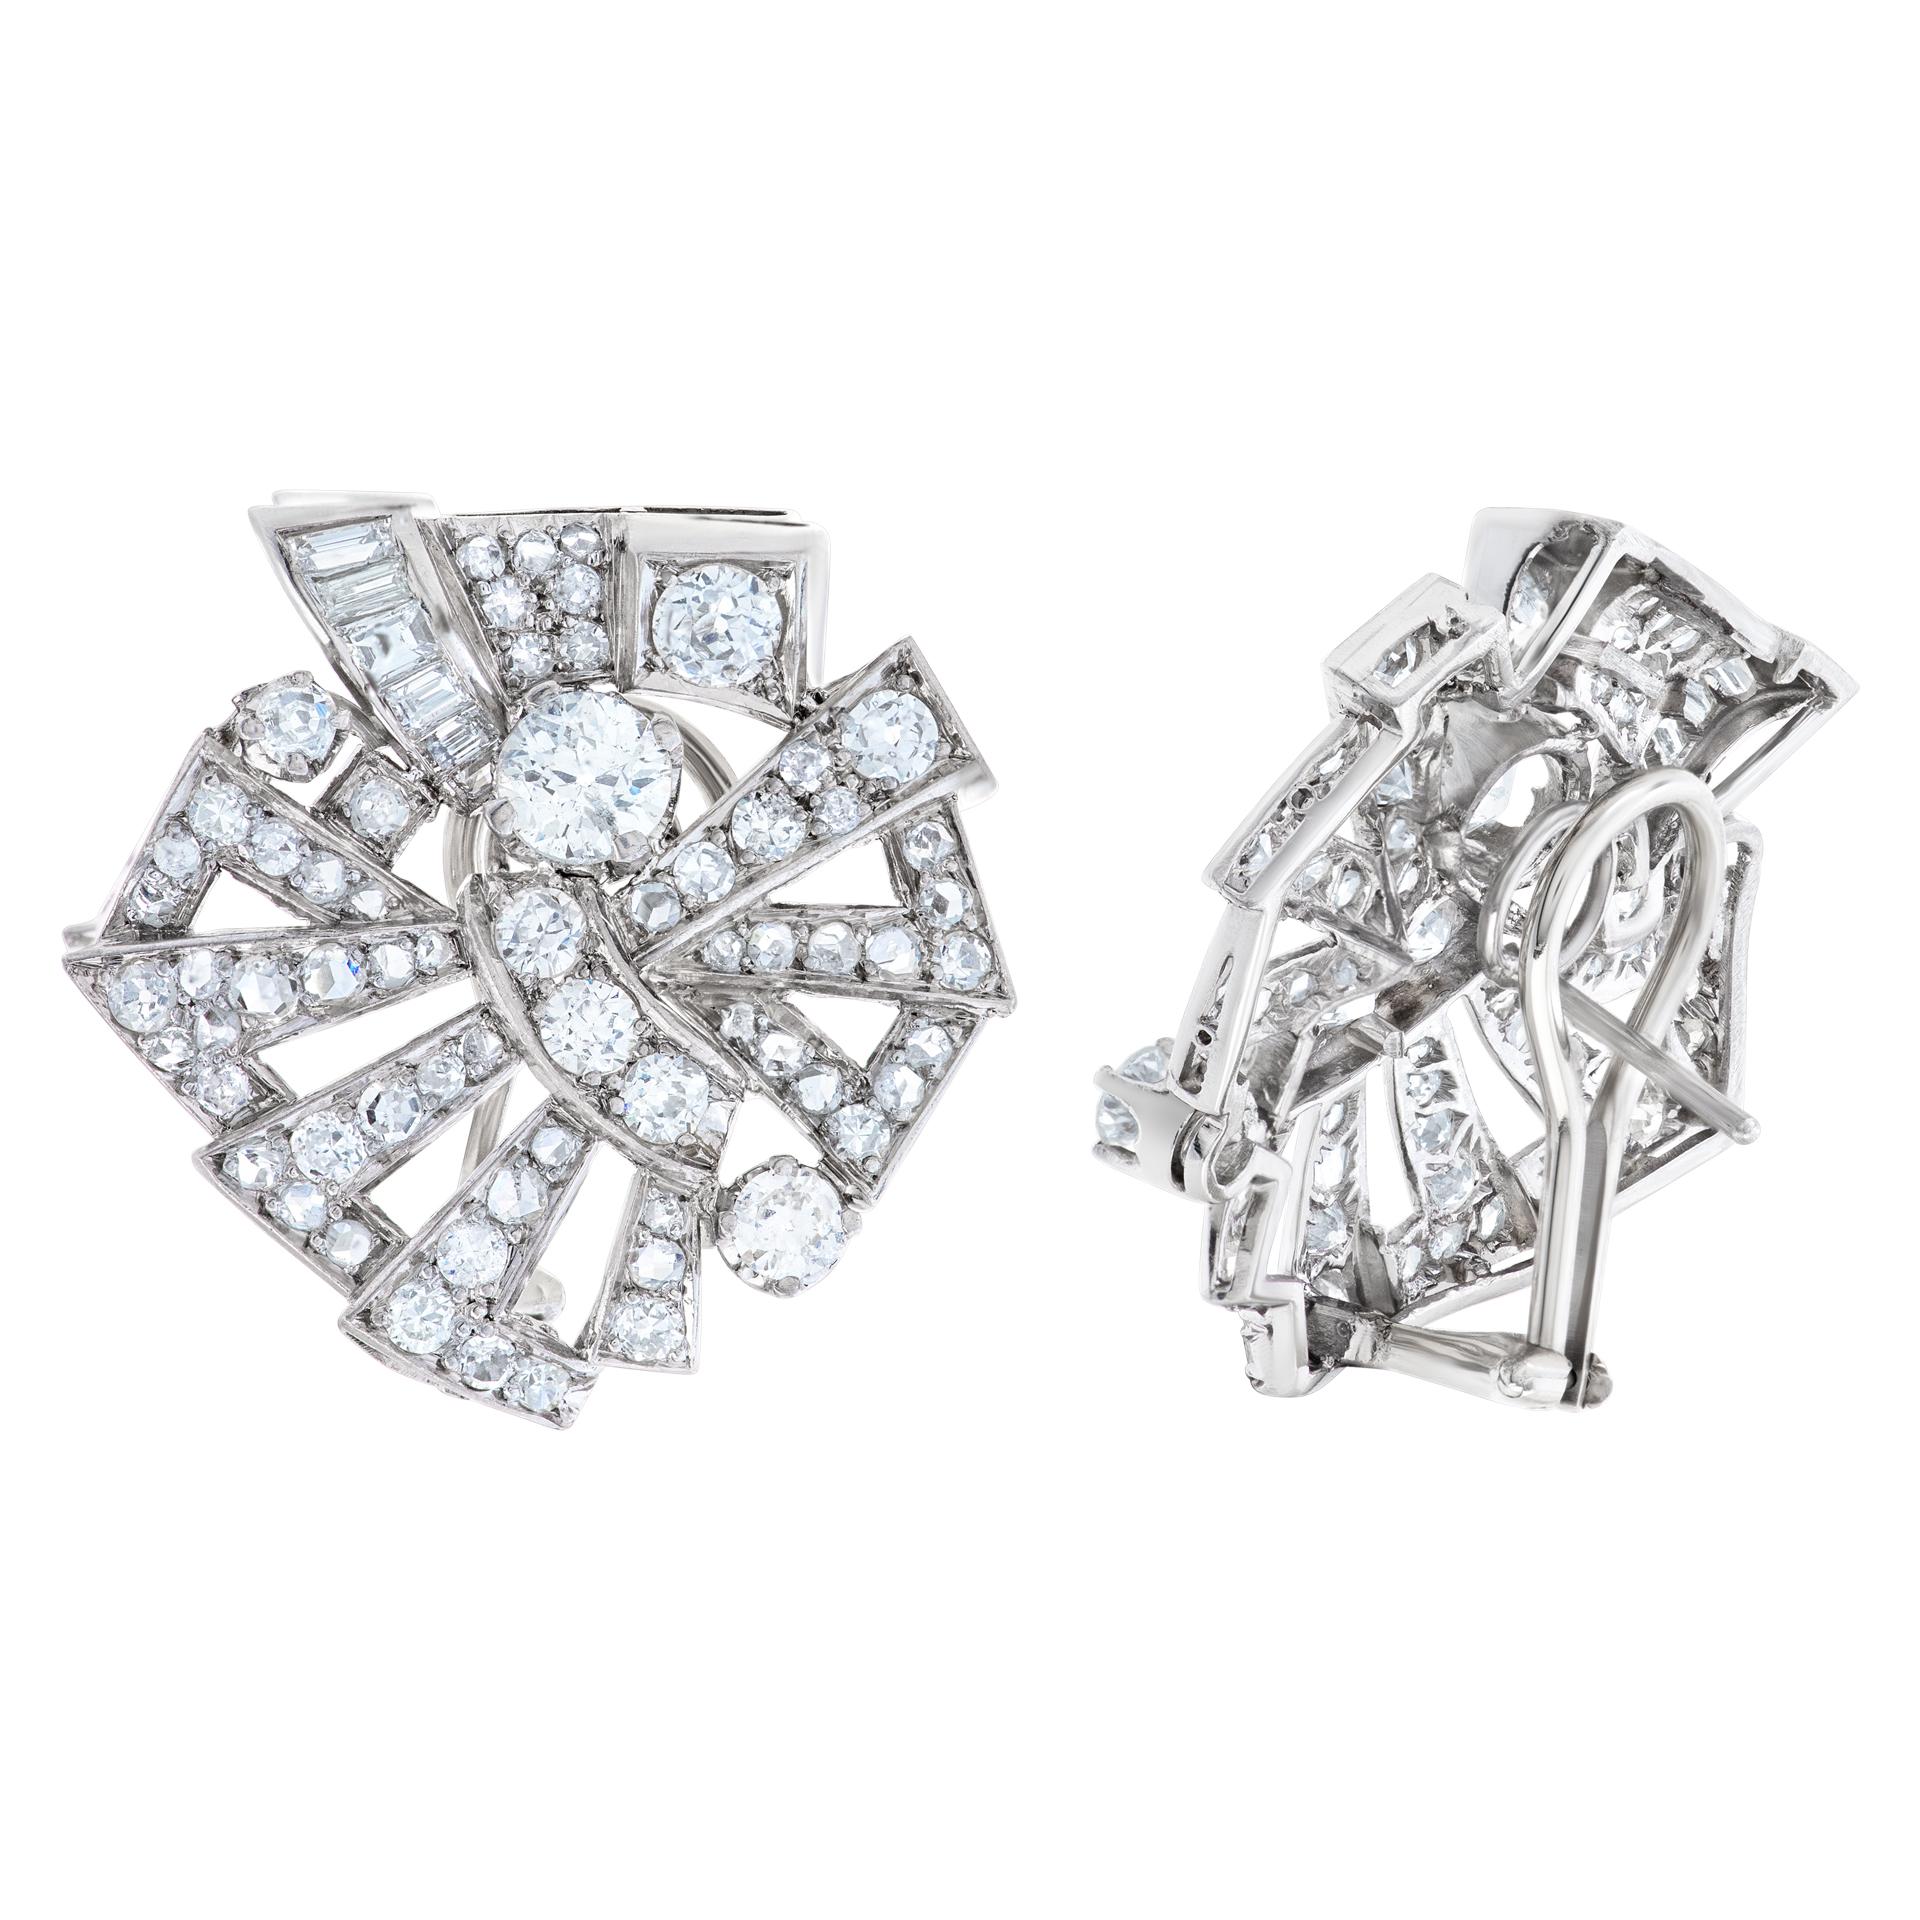 Old European Cut Art Deco Diamond Earrings in Platinum